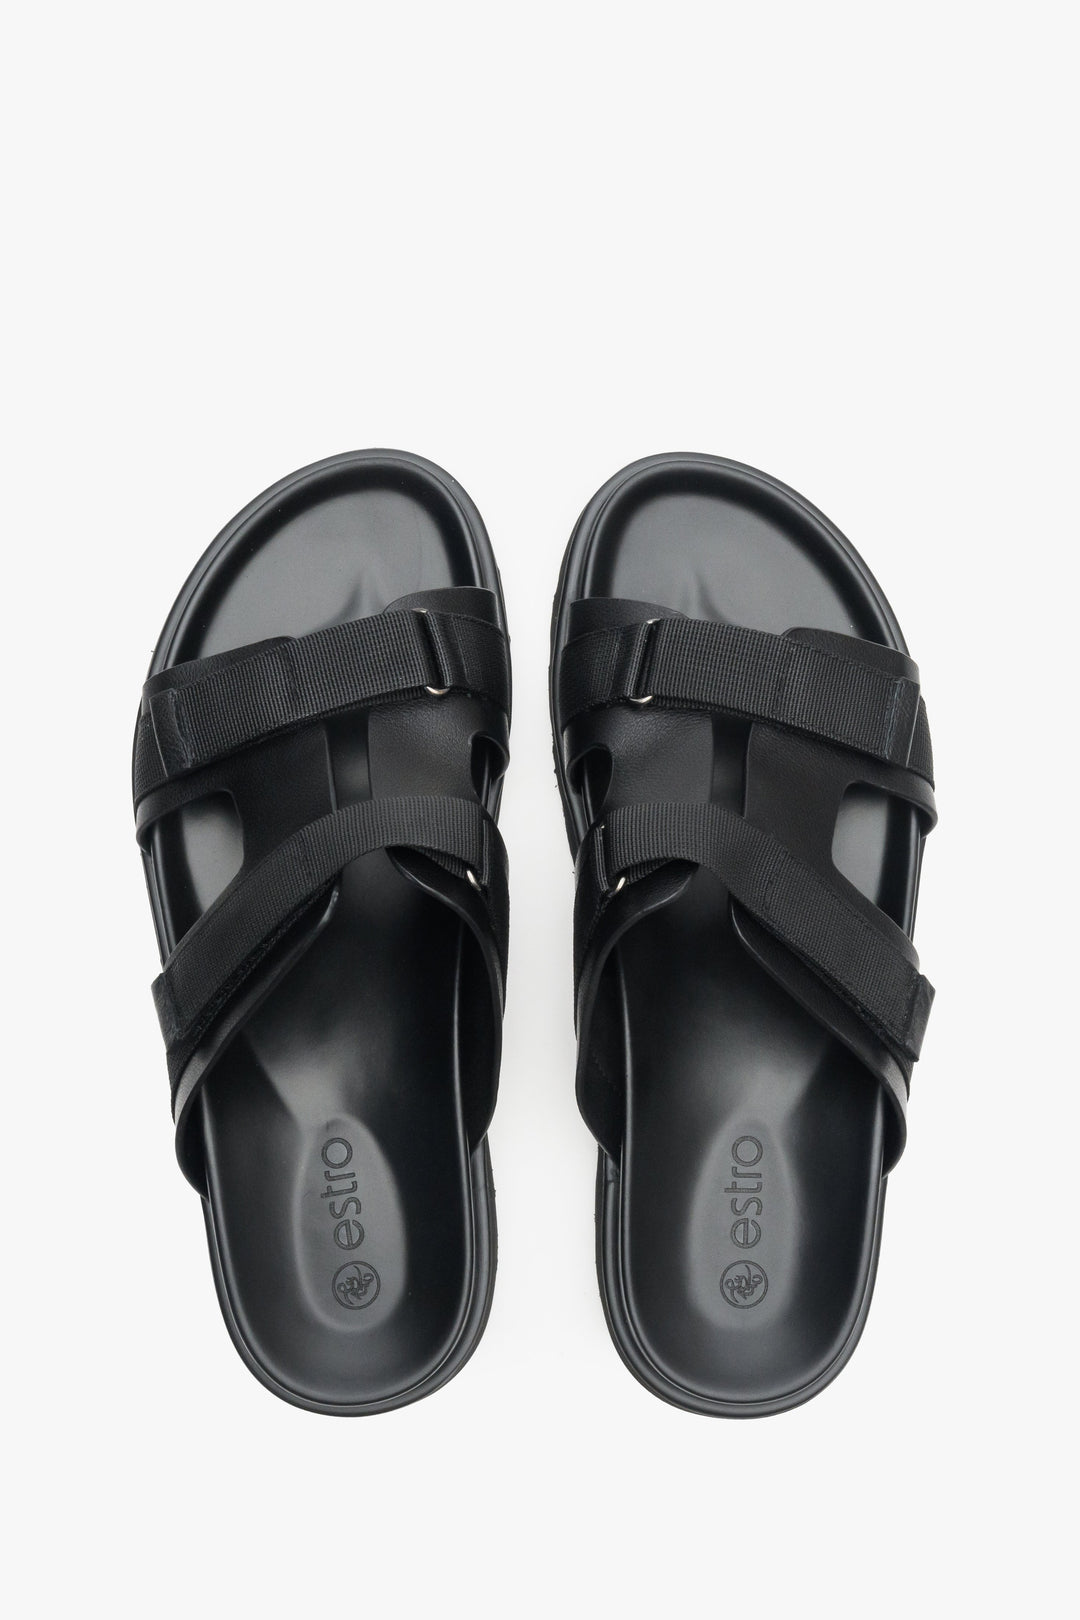 Men's black leather sandals by Estro - top view model presentation.